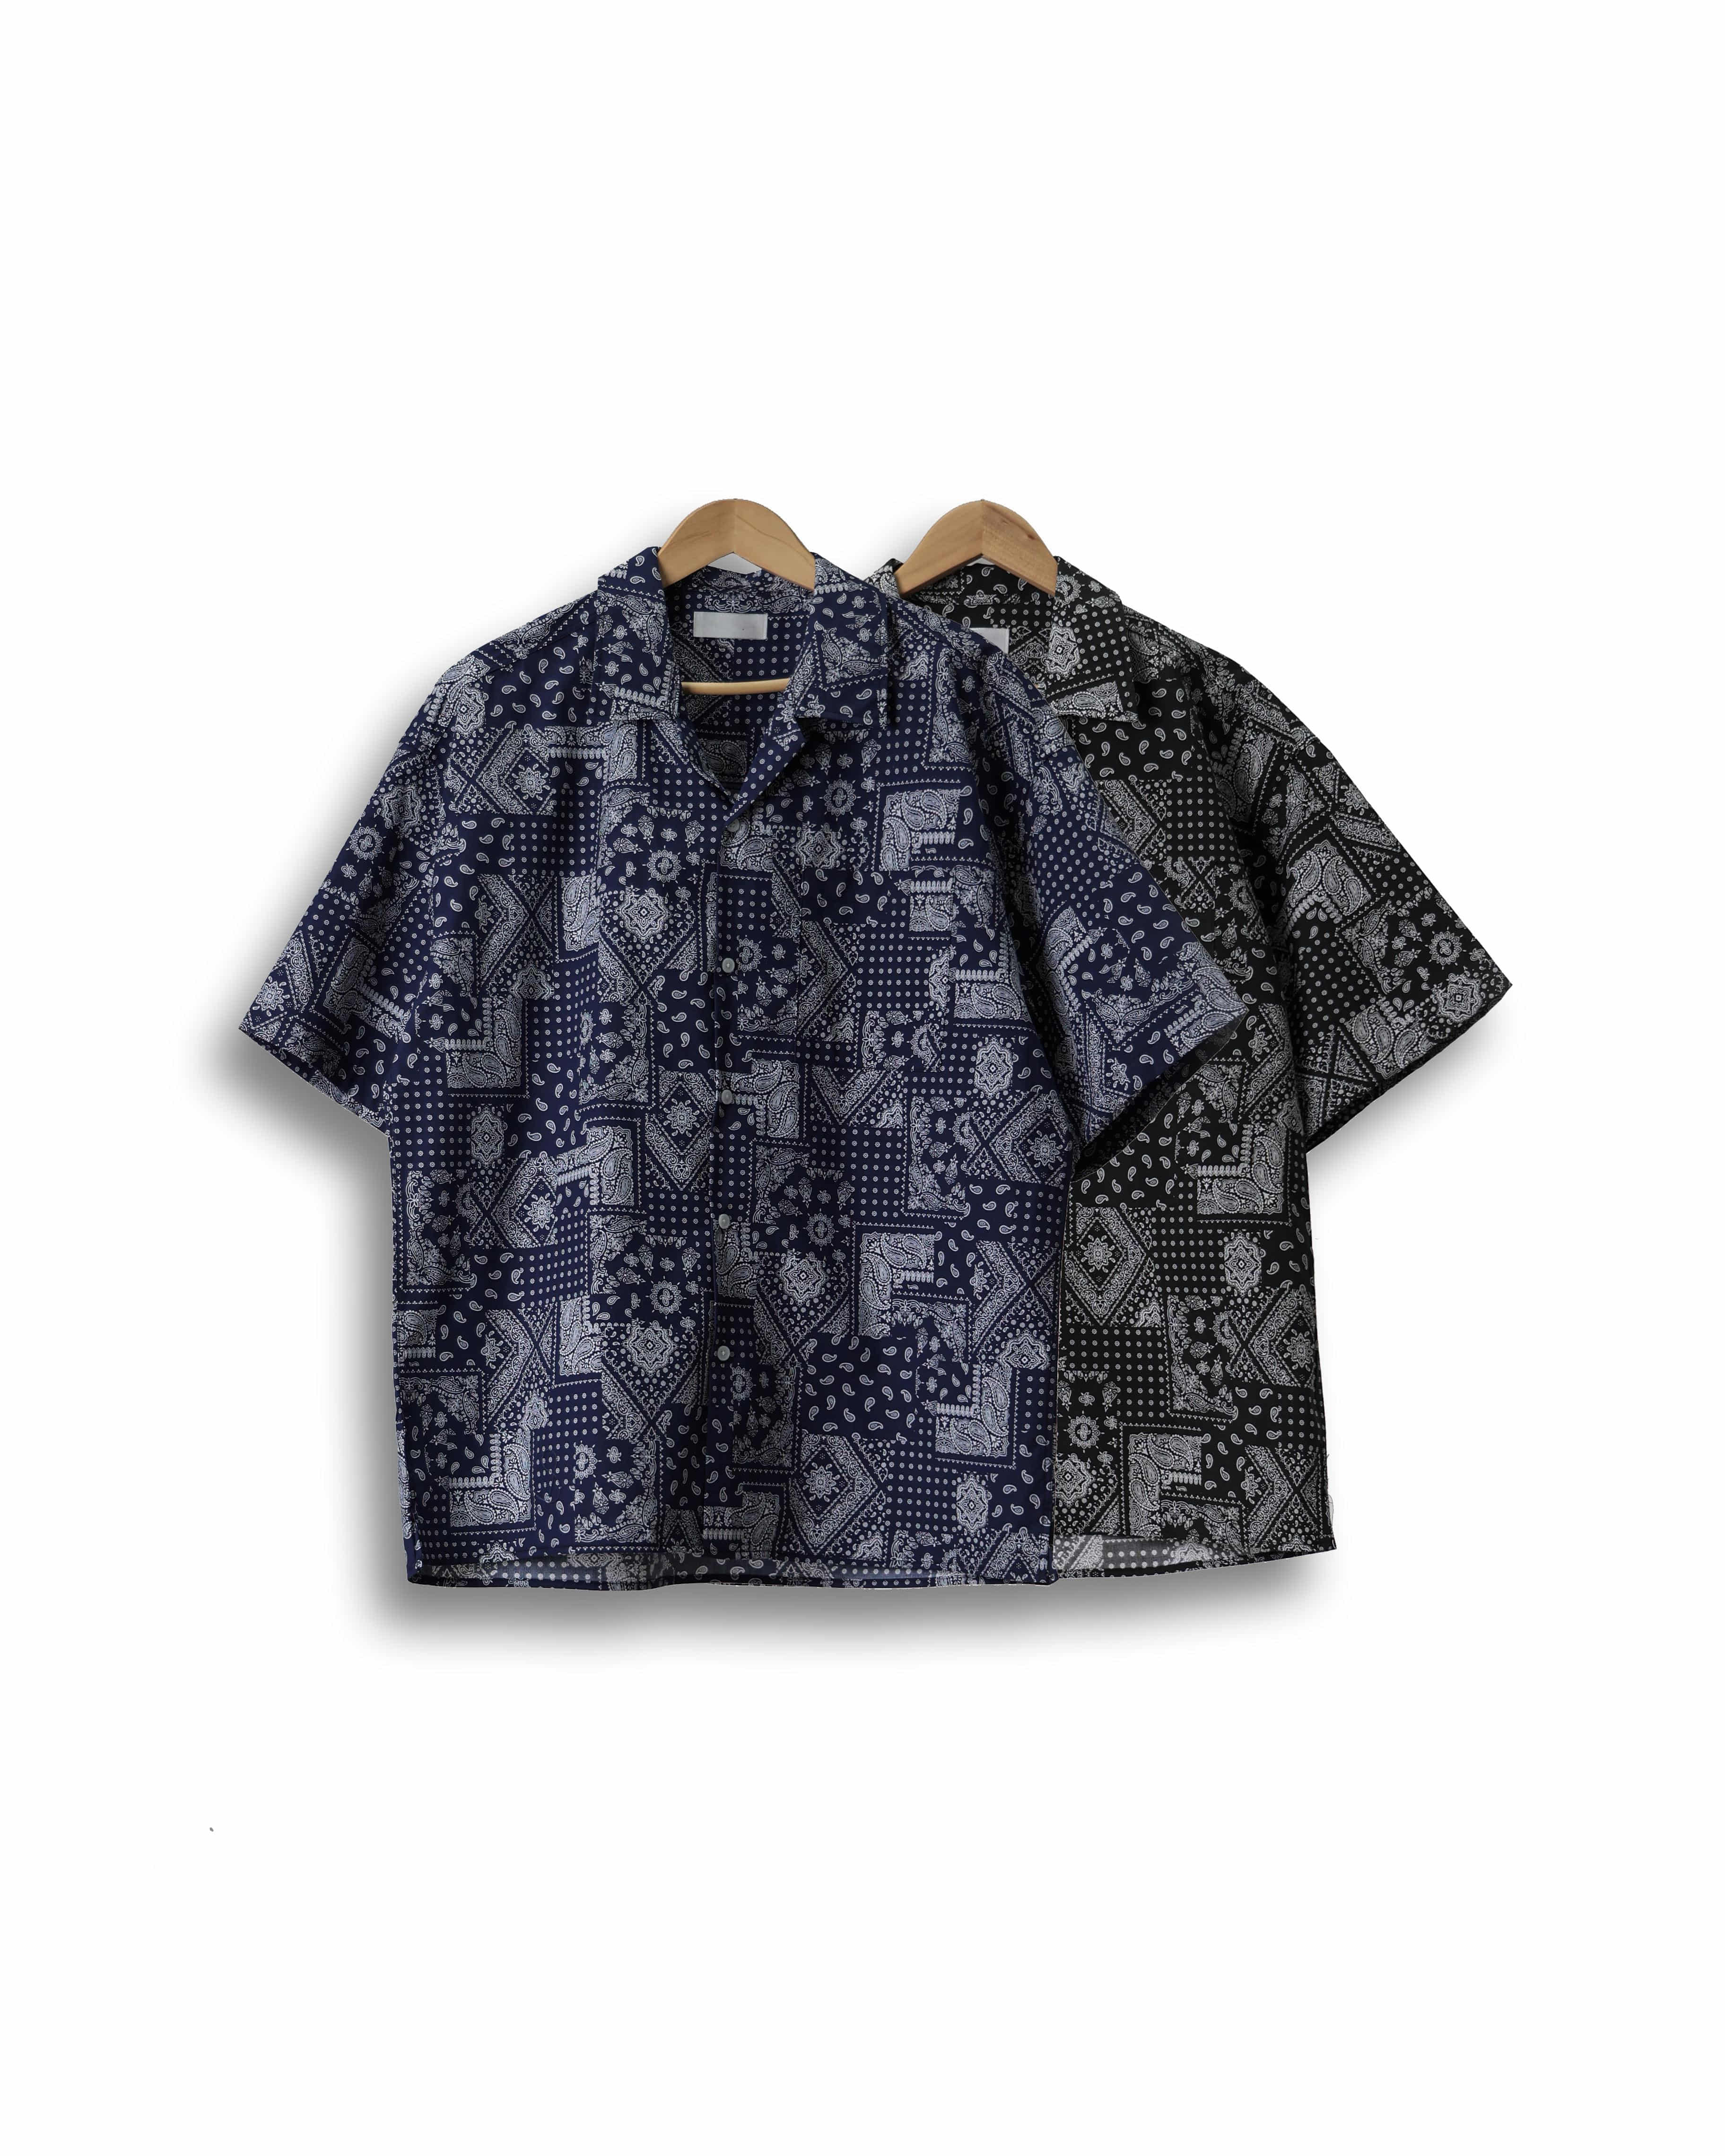 RAON Deep Paisley Pattern Half Shirts (Black/Navy)